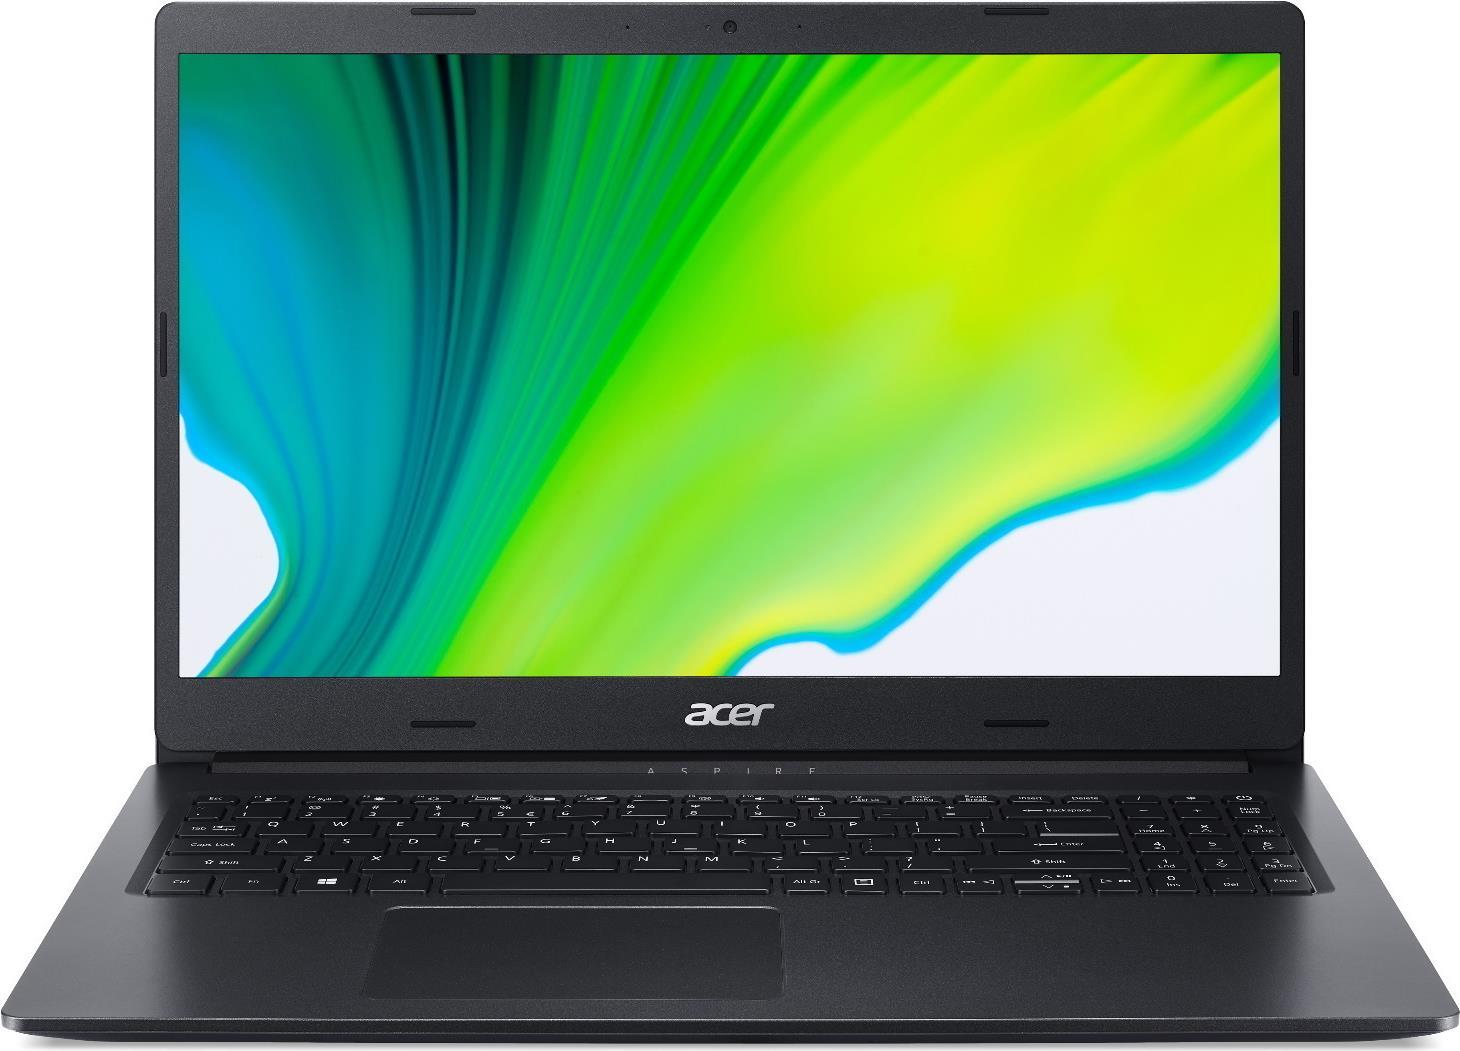 Acer Aspire 3 A315 23 Ryzen 5 3500U 2.1 GHz Win 11 Home Radeon Vega 8 8 GB RAM 256 GB SSD 39.62 cm (15.6) 1920 x 1080 (Full HD) Wi Fi 5 Charcoal Black kbd Deutsch  - Onlineshop JACOB Elektronik